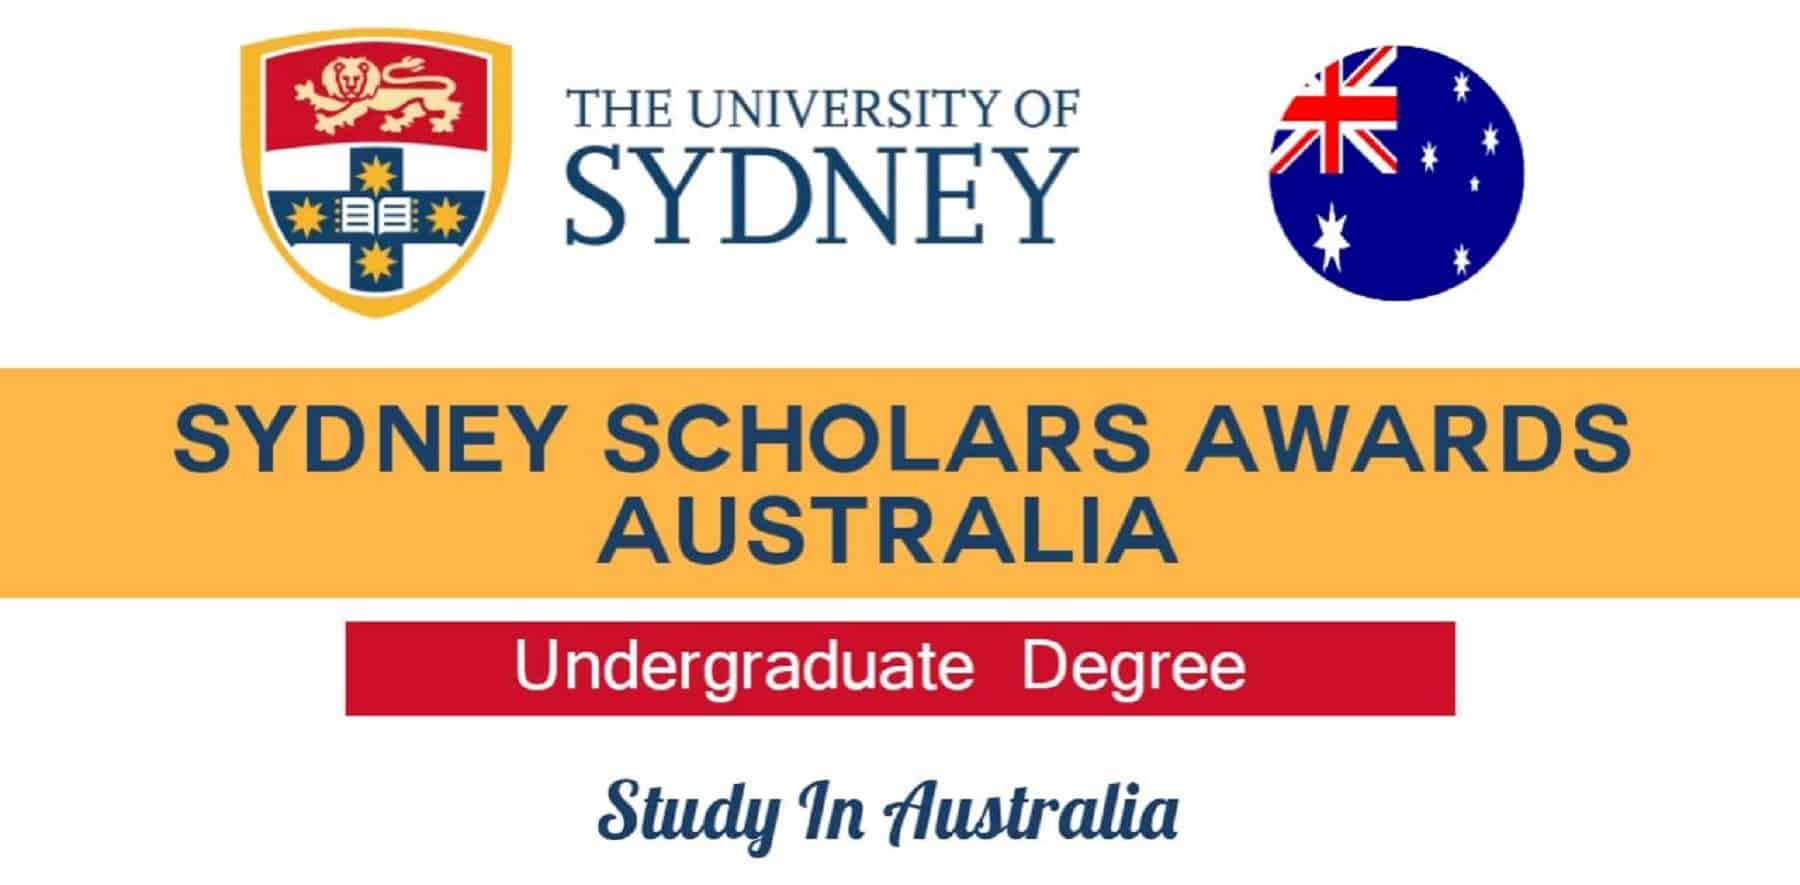 Sydney Scholars Awards 2022-2023 in Australia